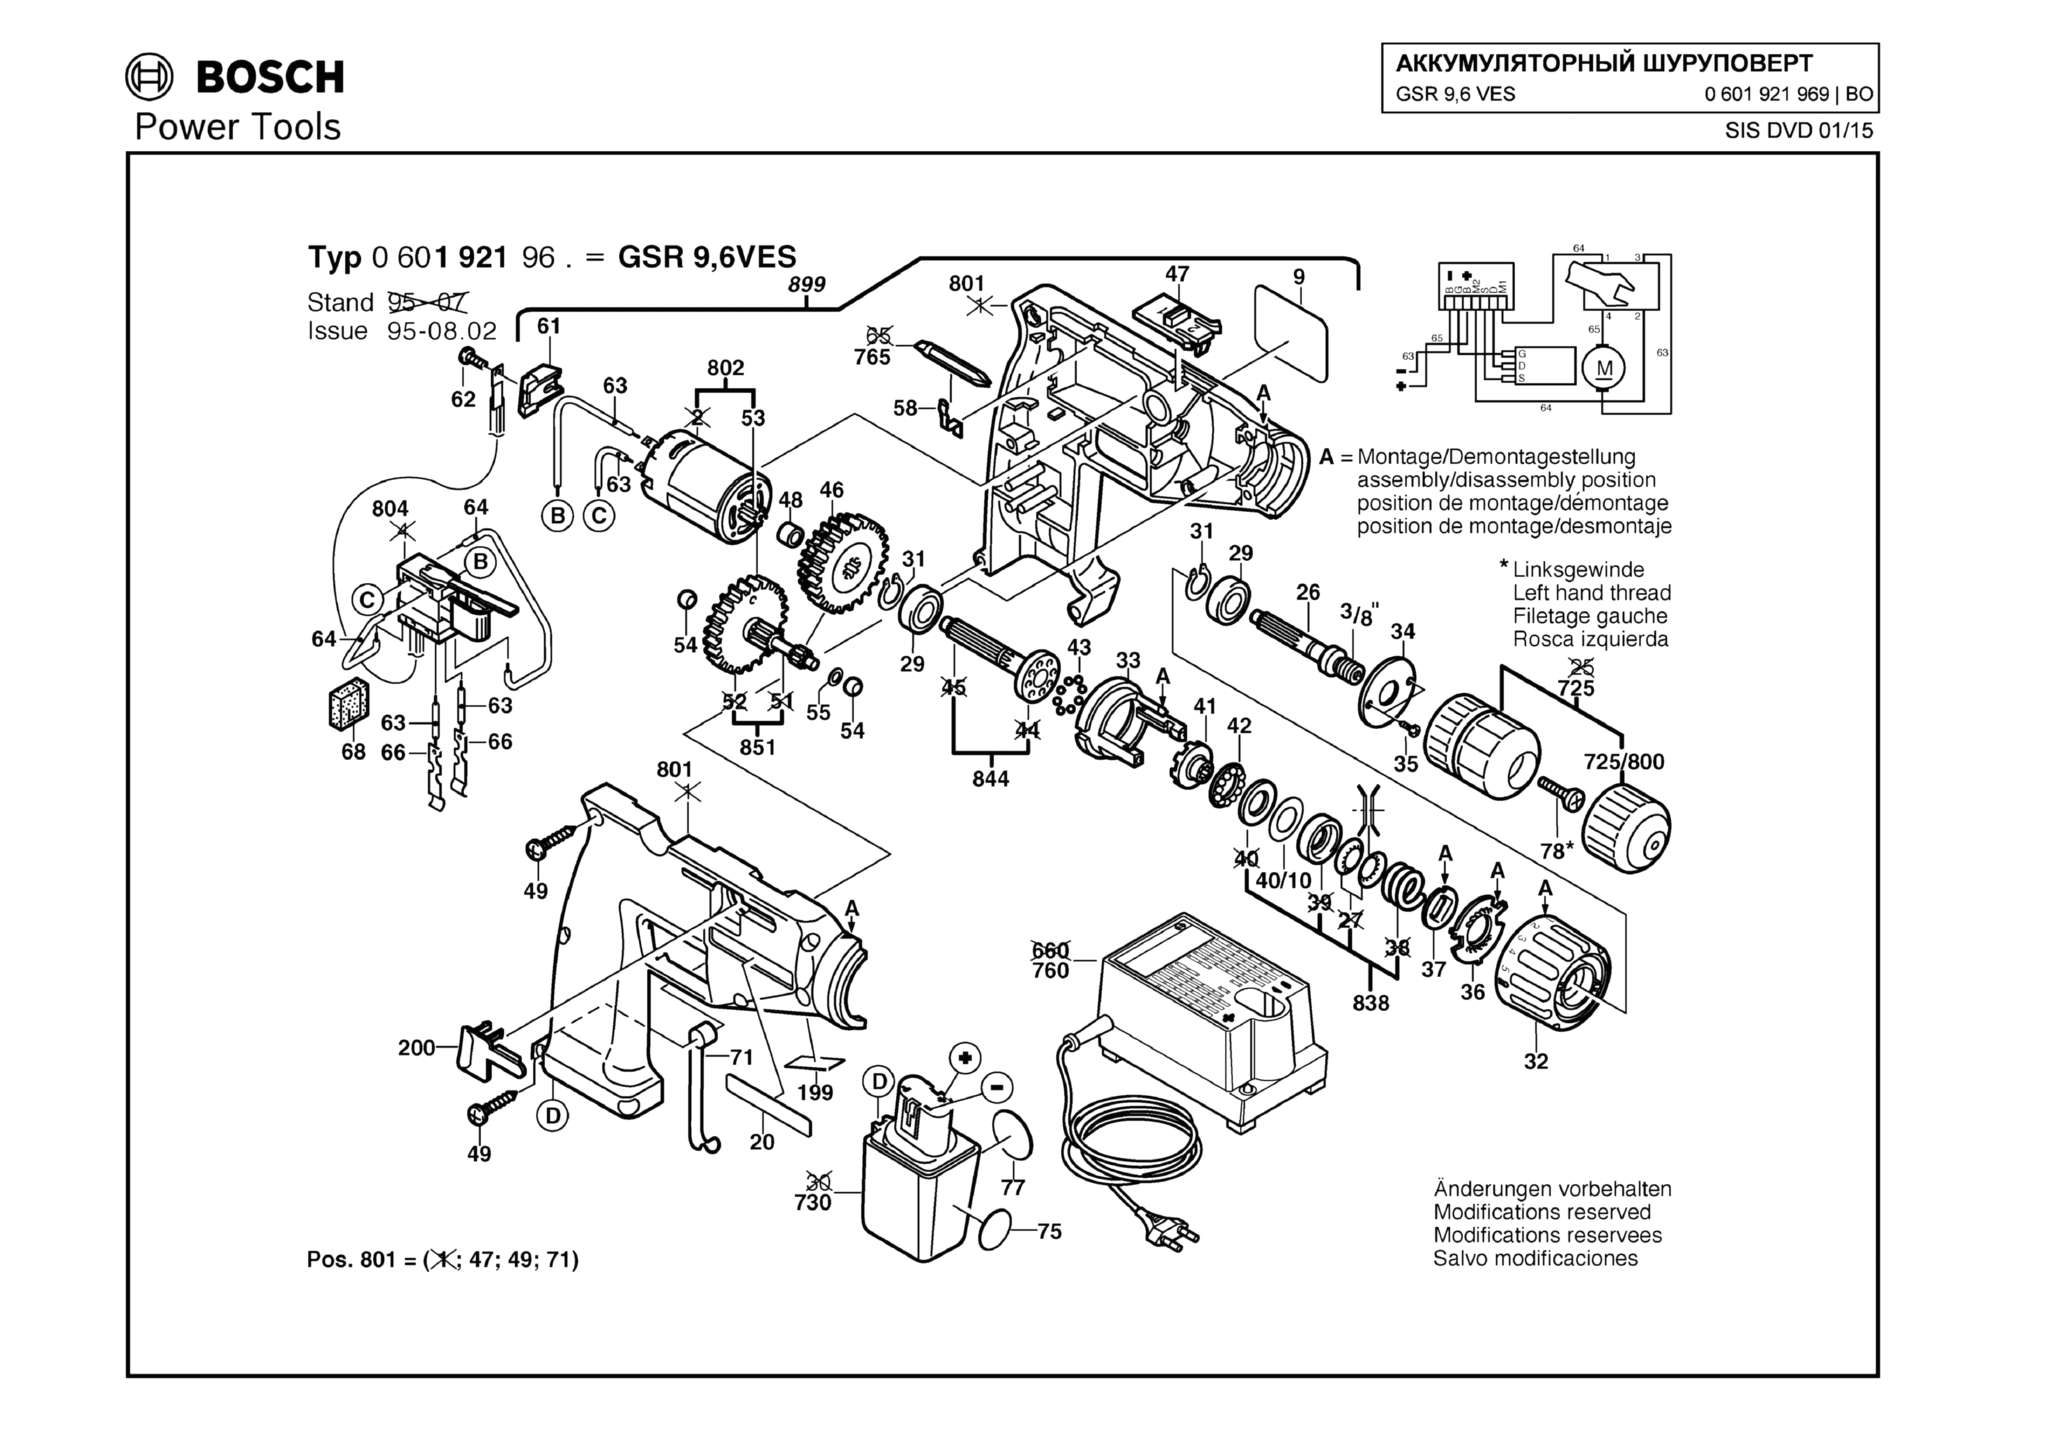 Запчасти, схема и деталировка Bosch GSR 9,6 VES (ТИП 0601921969)